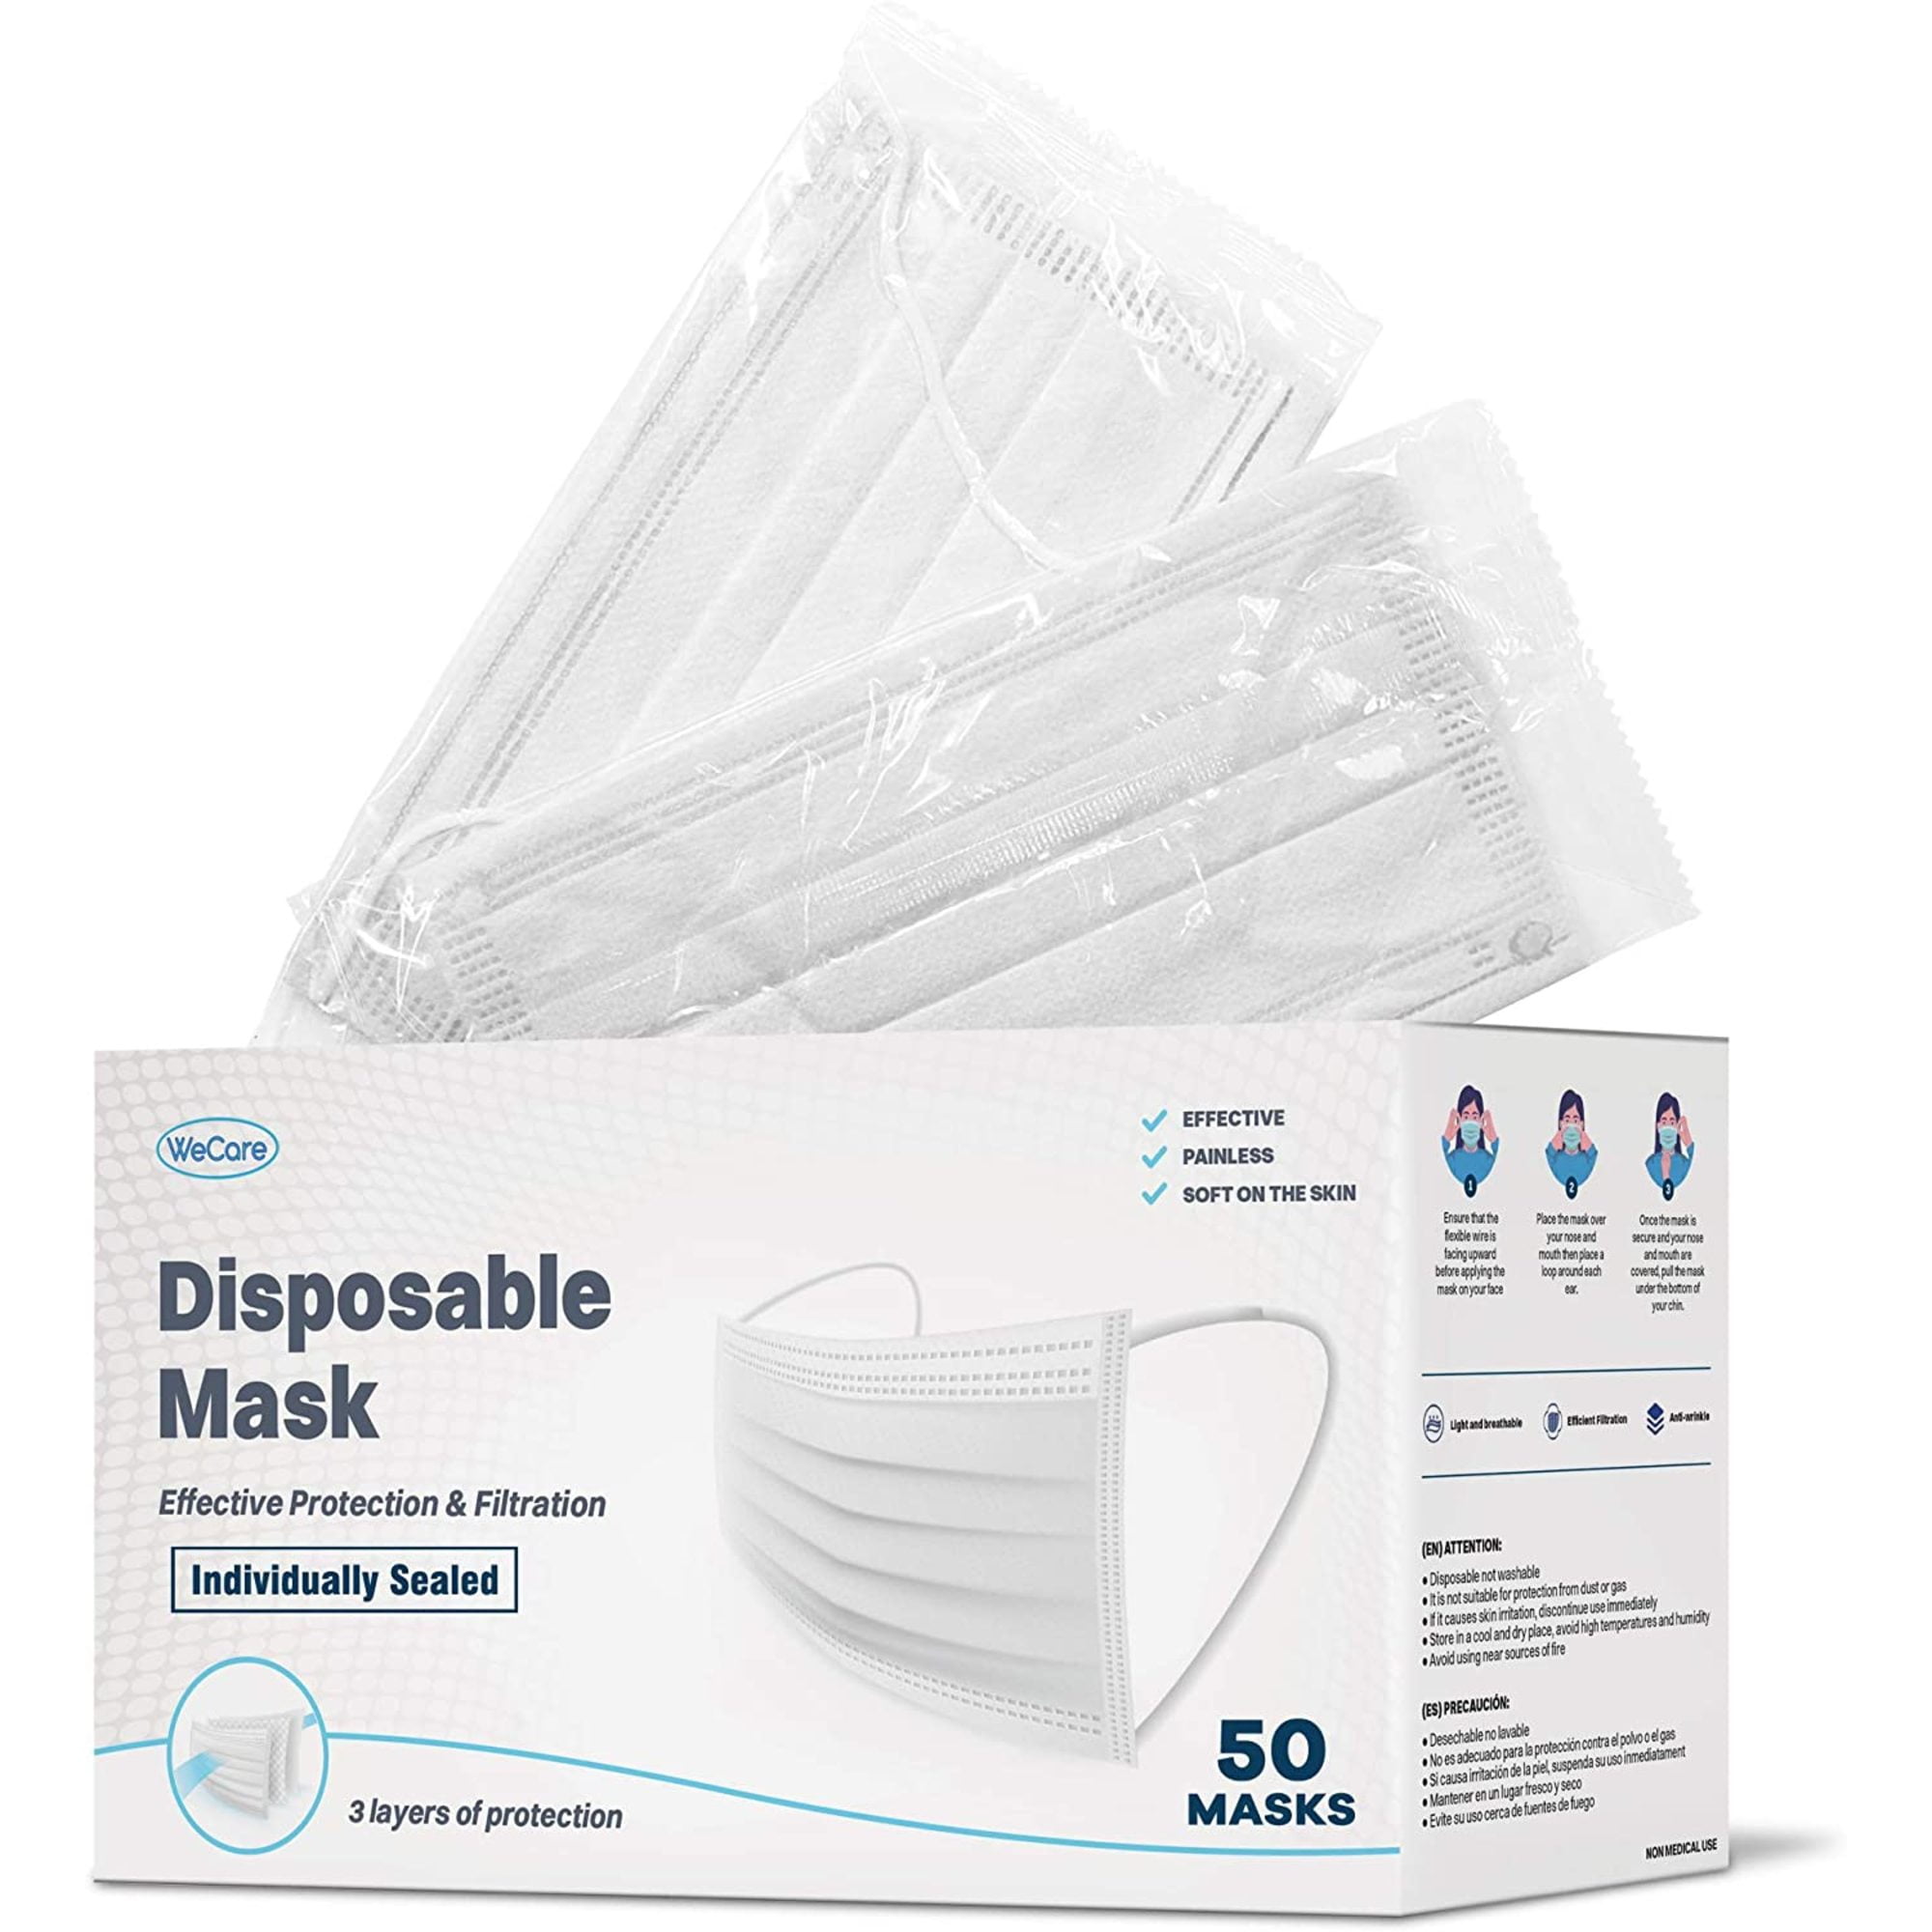 Disposable Masks White, White Diposable Masks, Dust Mouth White Mask